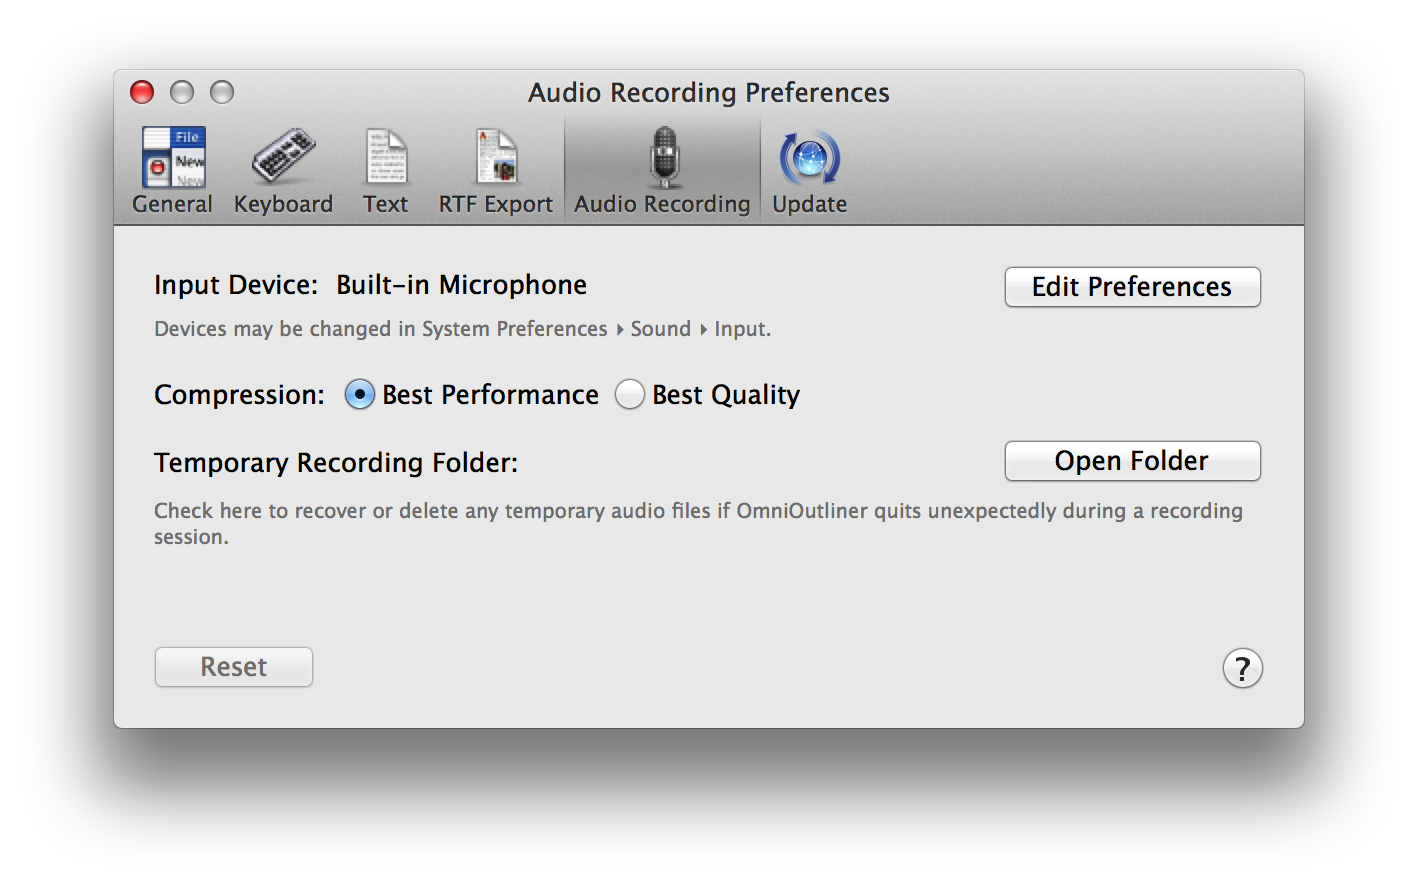 Audio Recording Preferences